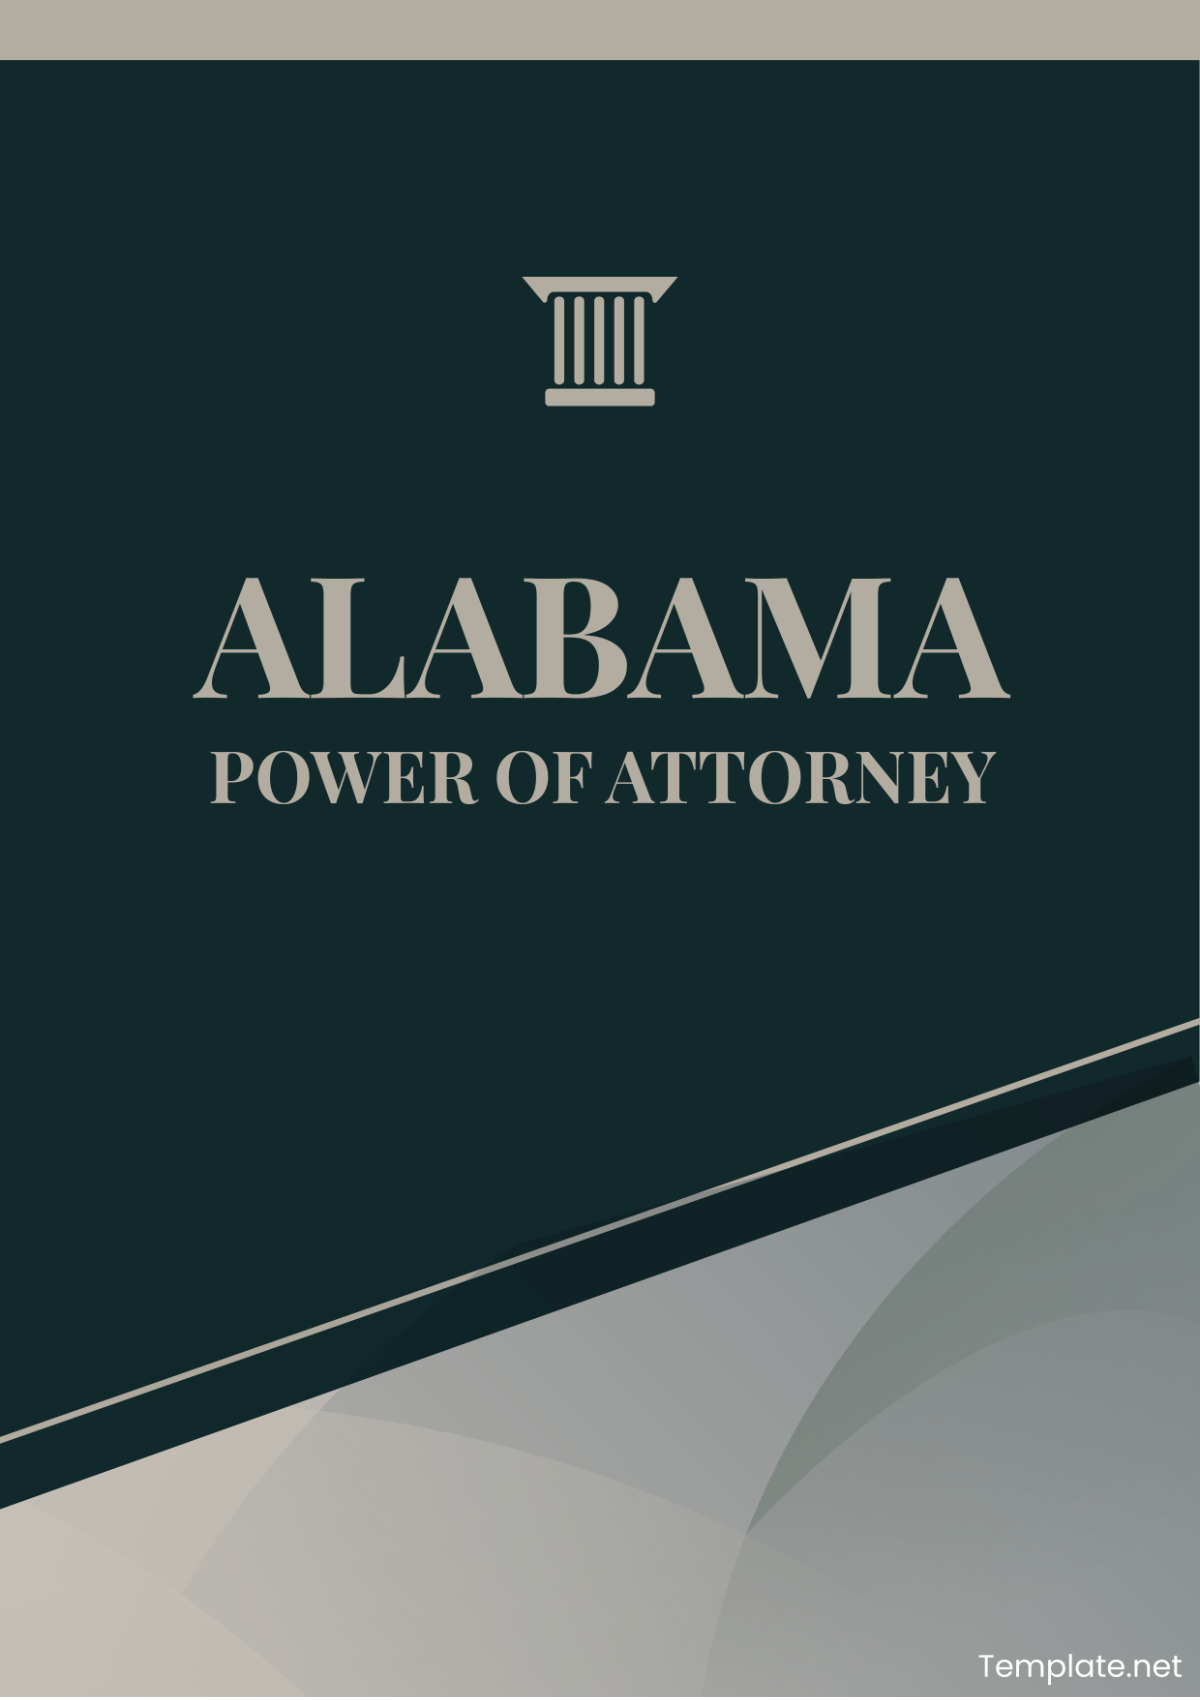 Alabama Power of Attorney Template